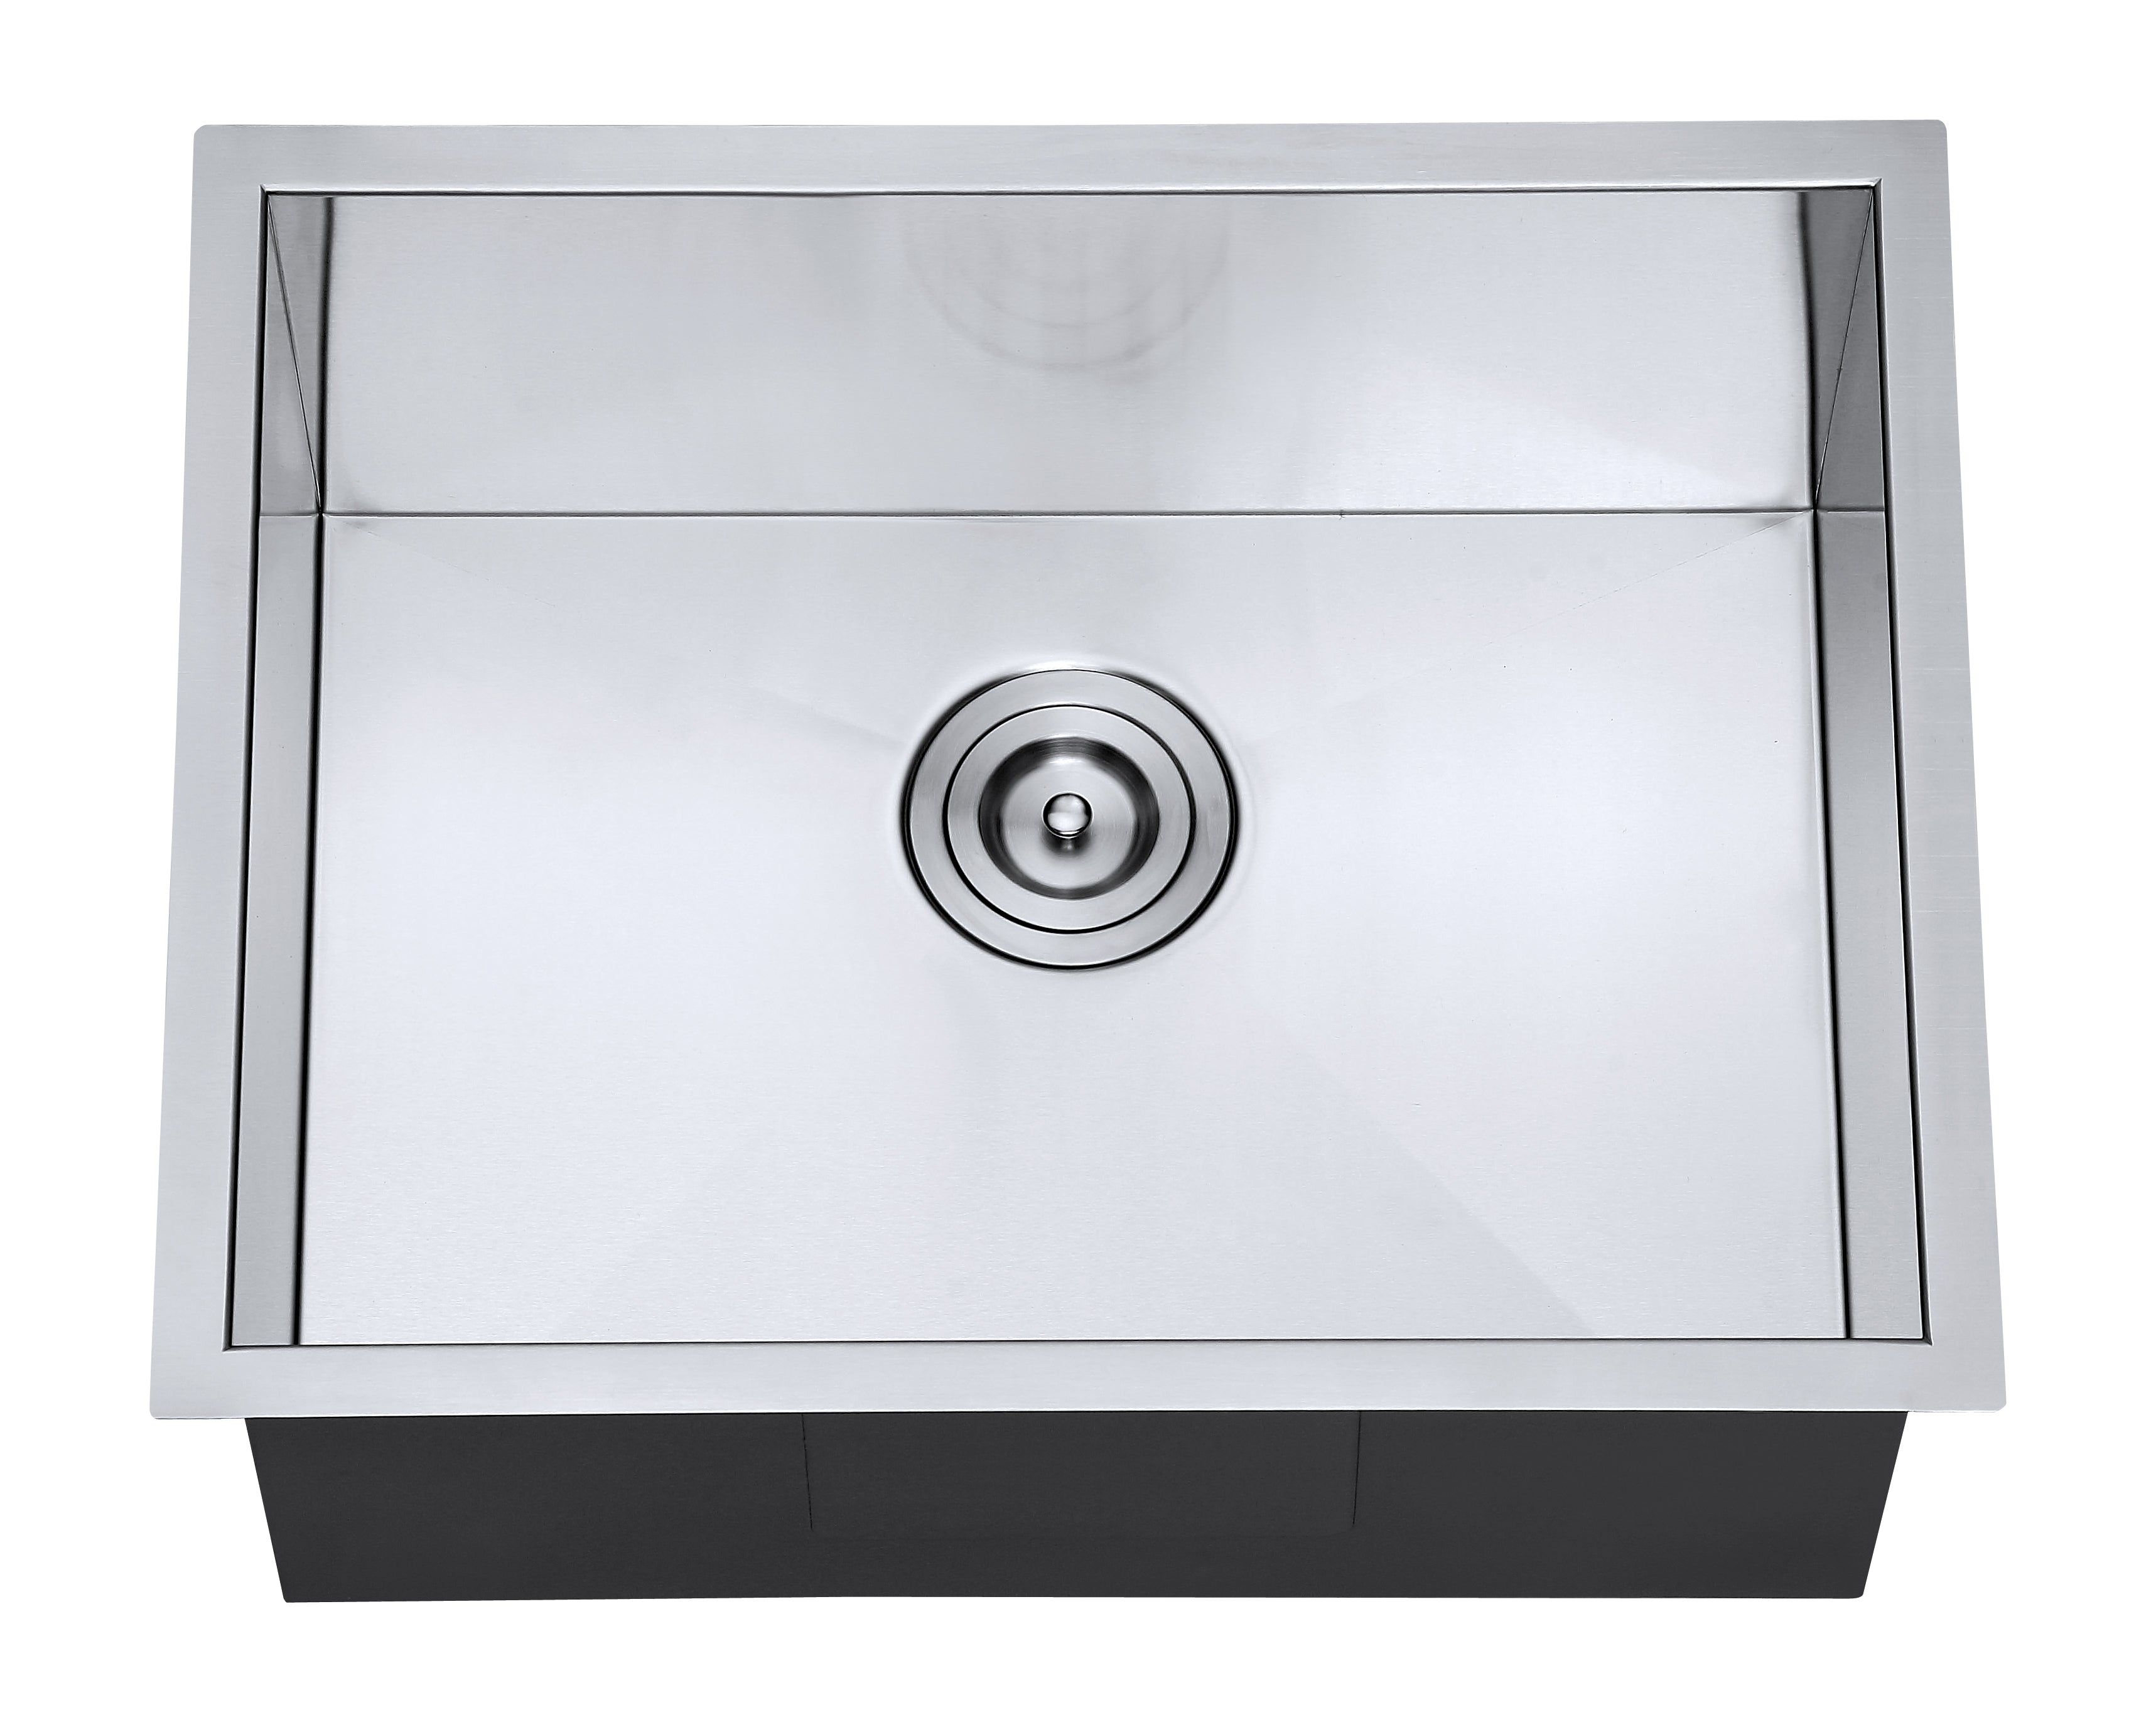 DAX Single Bowl Undermount Kitchen Sink, 18 Gauge Stainless Steel, Brushed Finish , 23 x 18 x 10 Inches (DAX-SQ-2318-X)